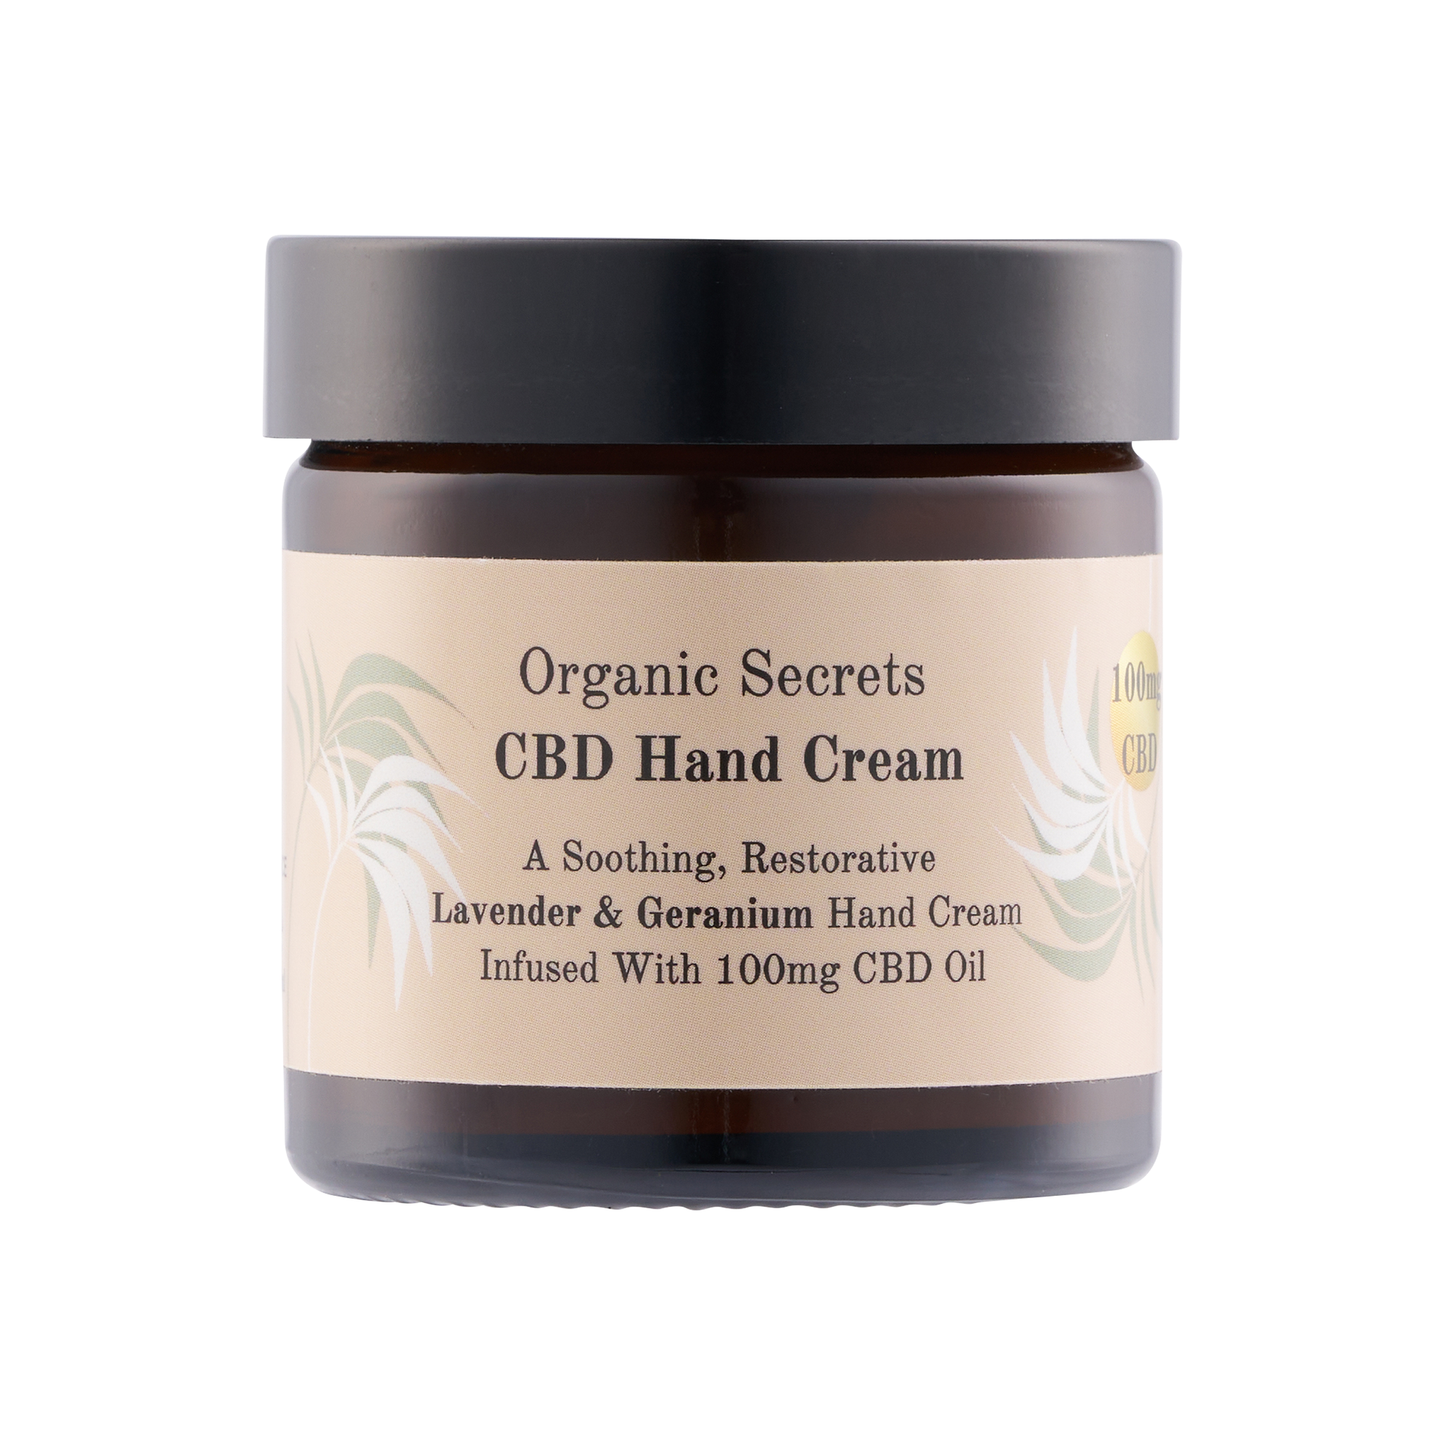 Lavender & Geranium 100mg CBD hand and body cream from Organic Secrets UK Ltd